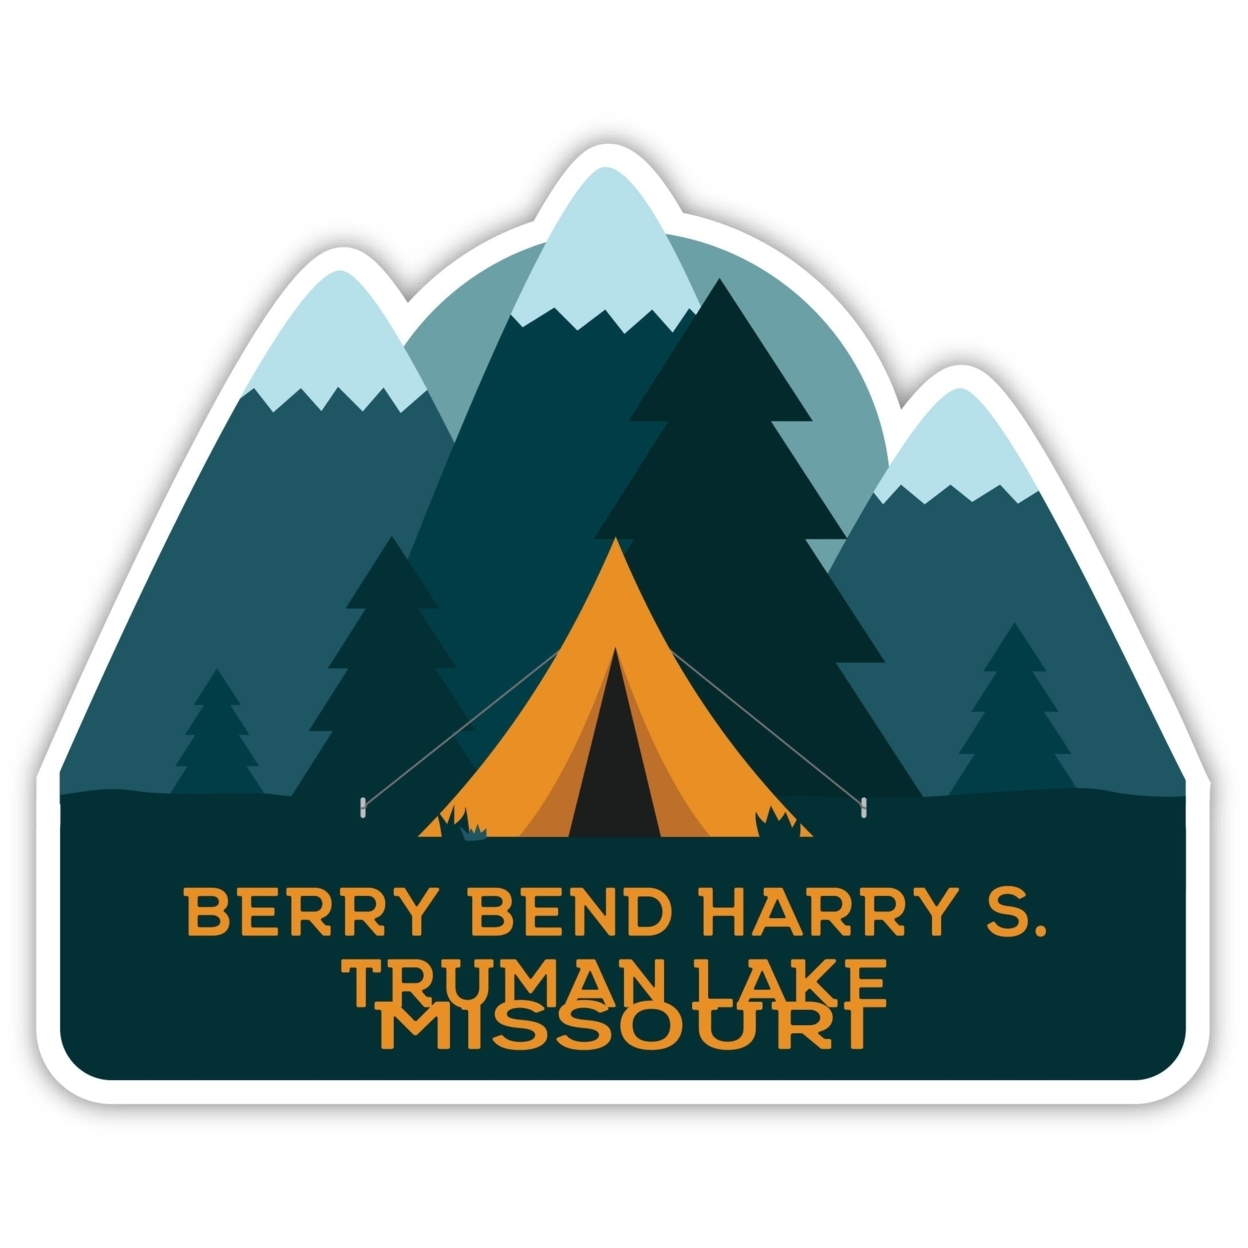 Berry Bend Harry S. Truman Lake Missouri Souvenir Decorative Stickers (Choose Theme And Size) - Single Unit, 6-Inch, Tent